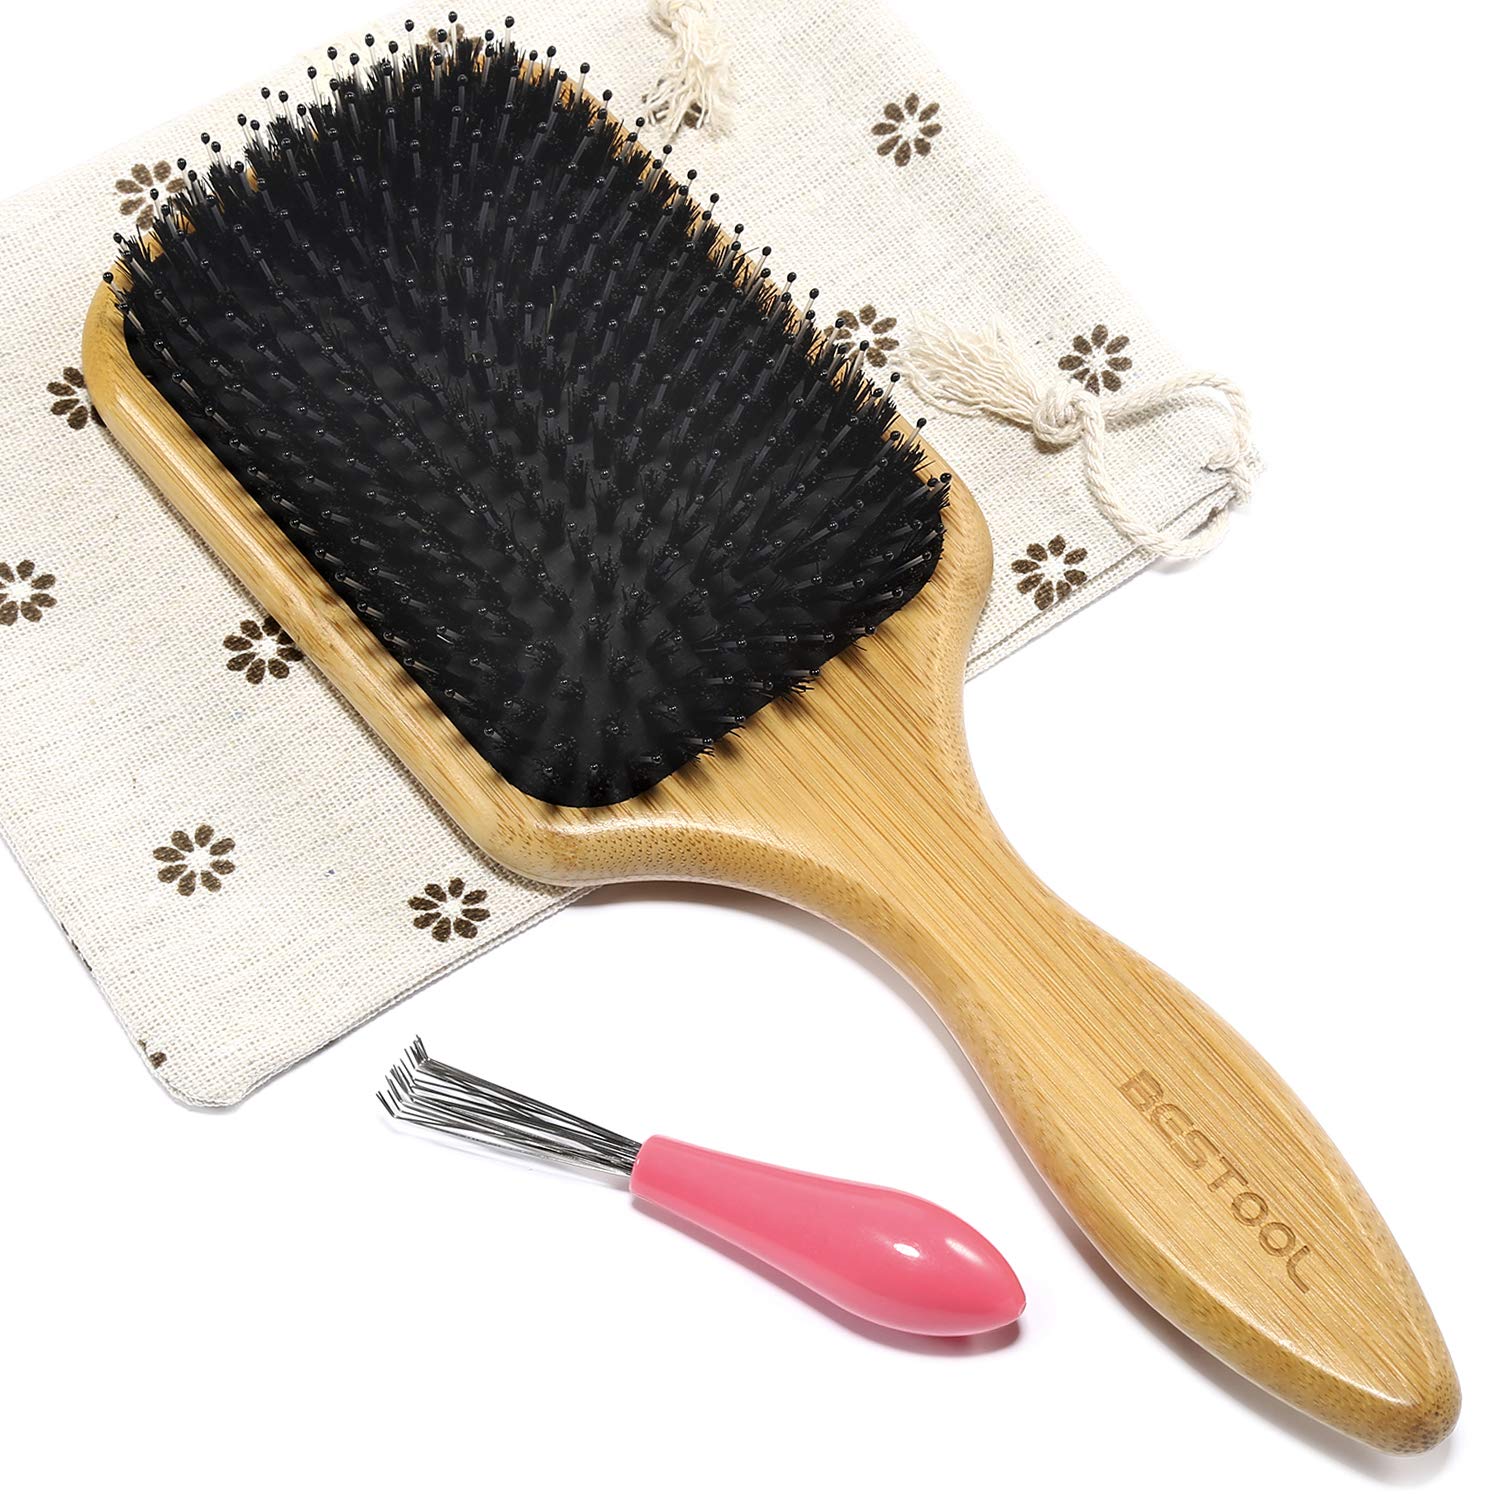 How do I clean my boar bristle brush?